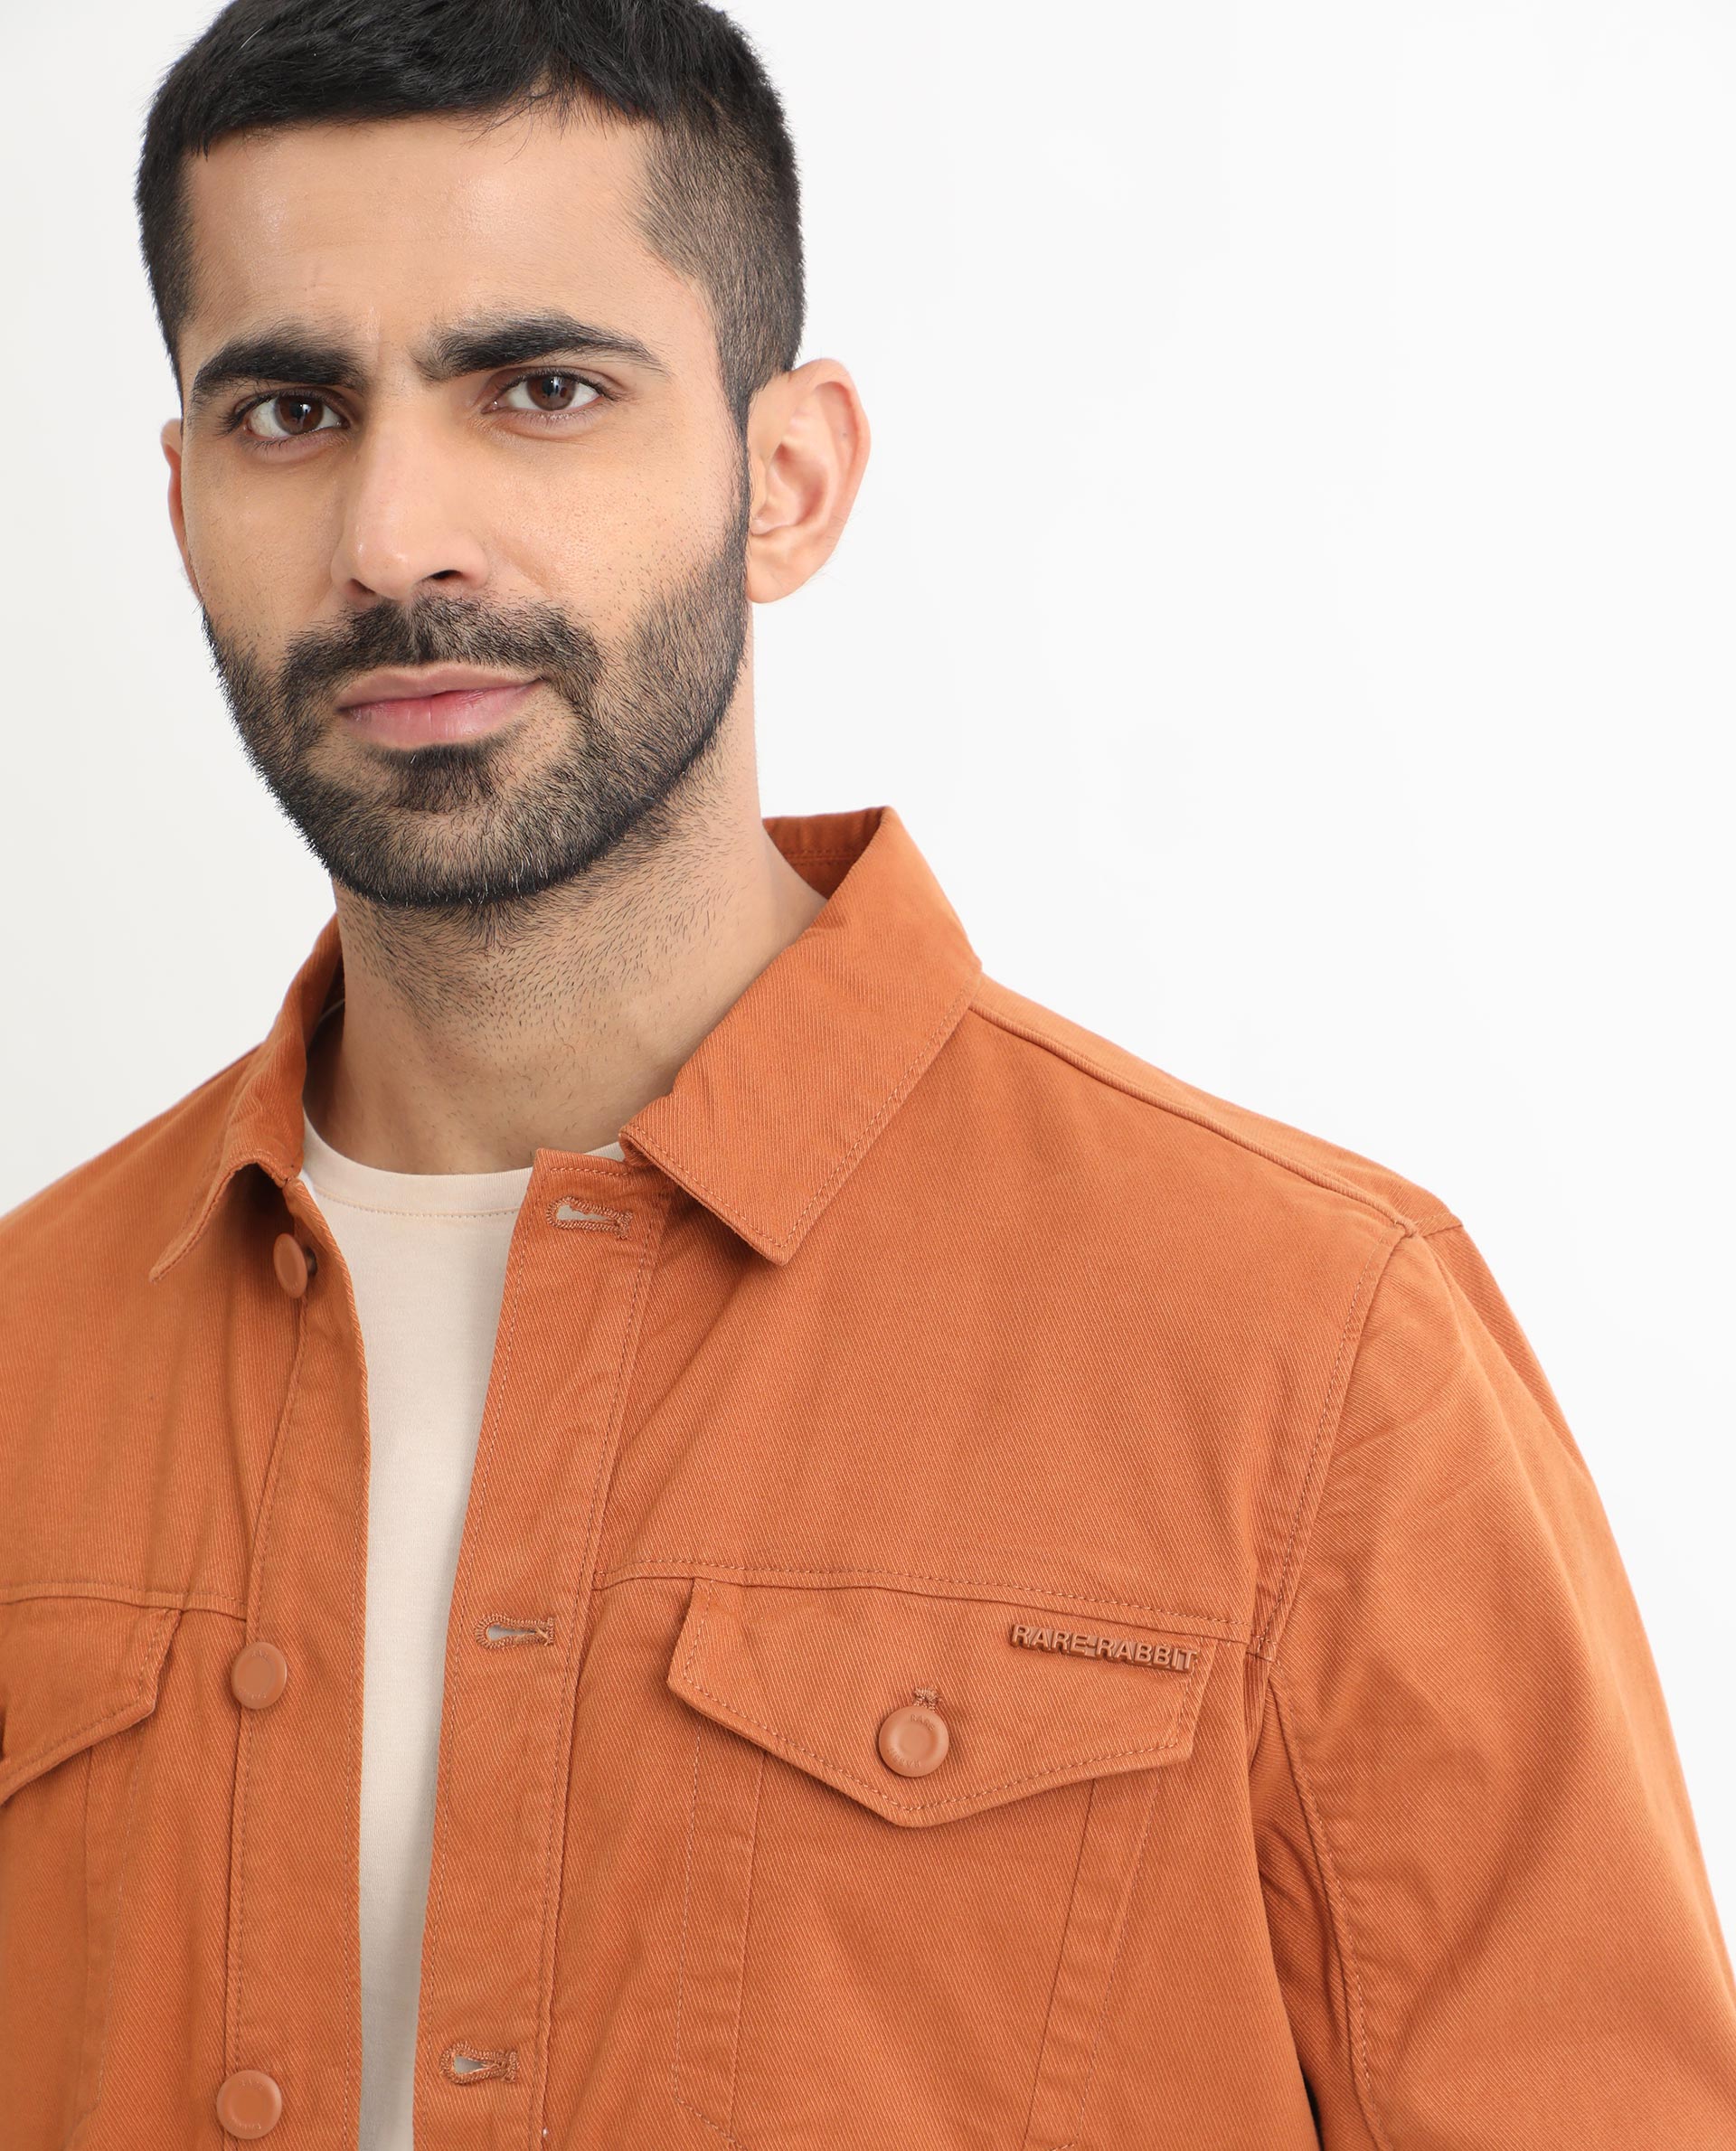 Men's Denim & Jeans Jacket | Denim Jackets For Men - Kara Hub